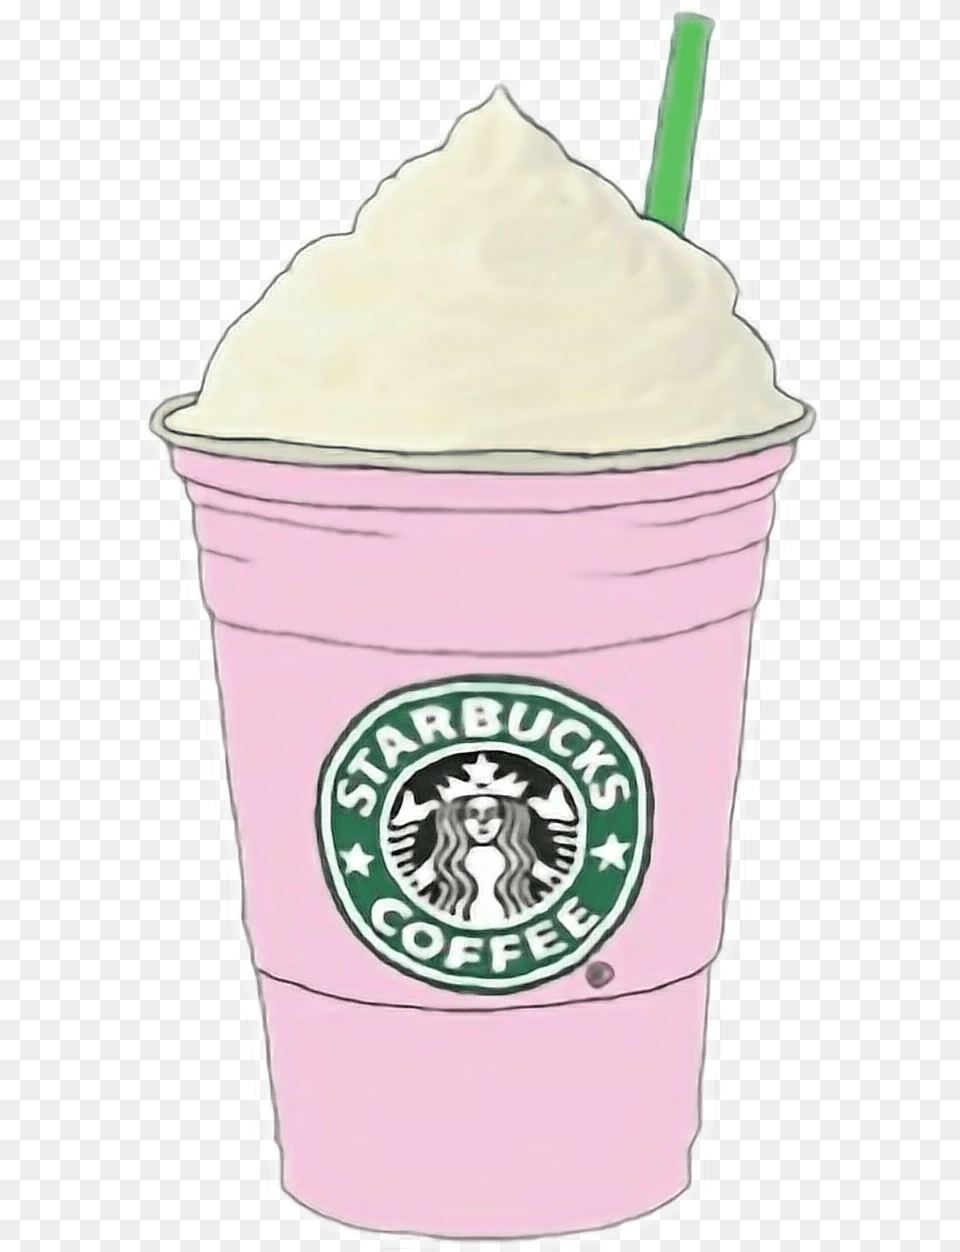 Starbucks Coffee Cafe Rosa Pink Tumblr Starbucks Cotton Candy Frappuccino, Cream, Dessert, Food, Ice Cream Png